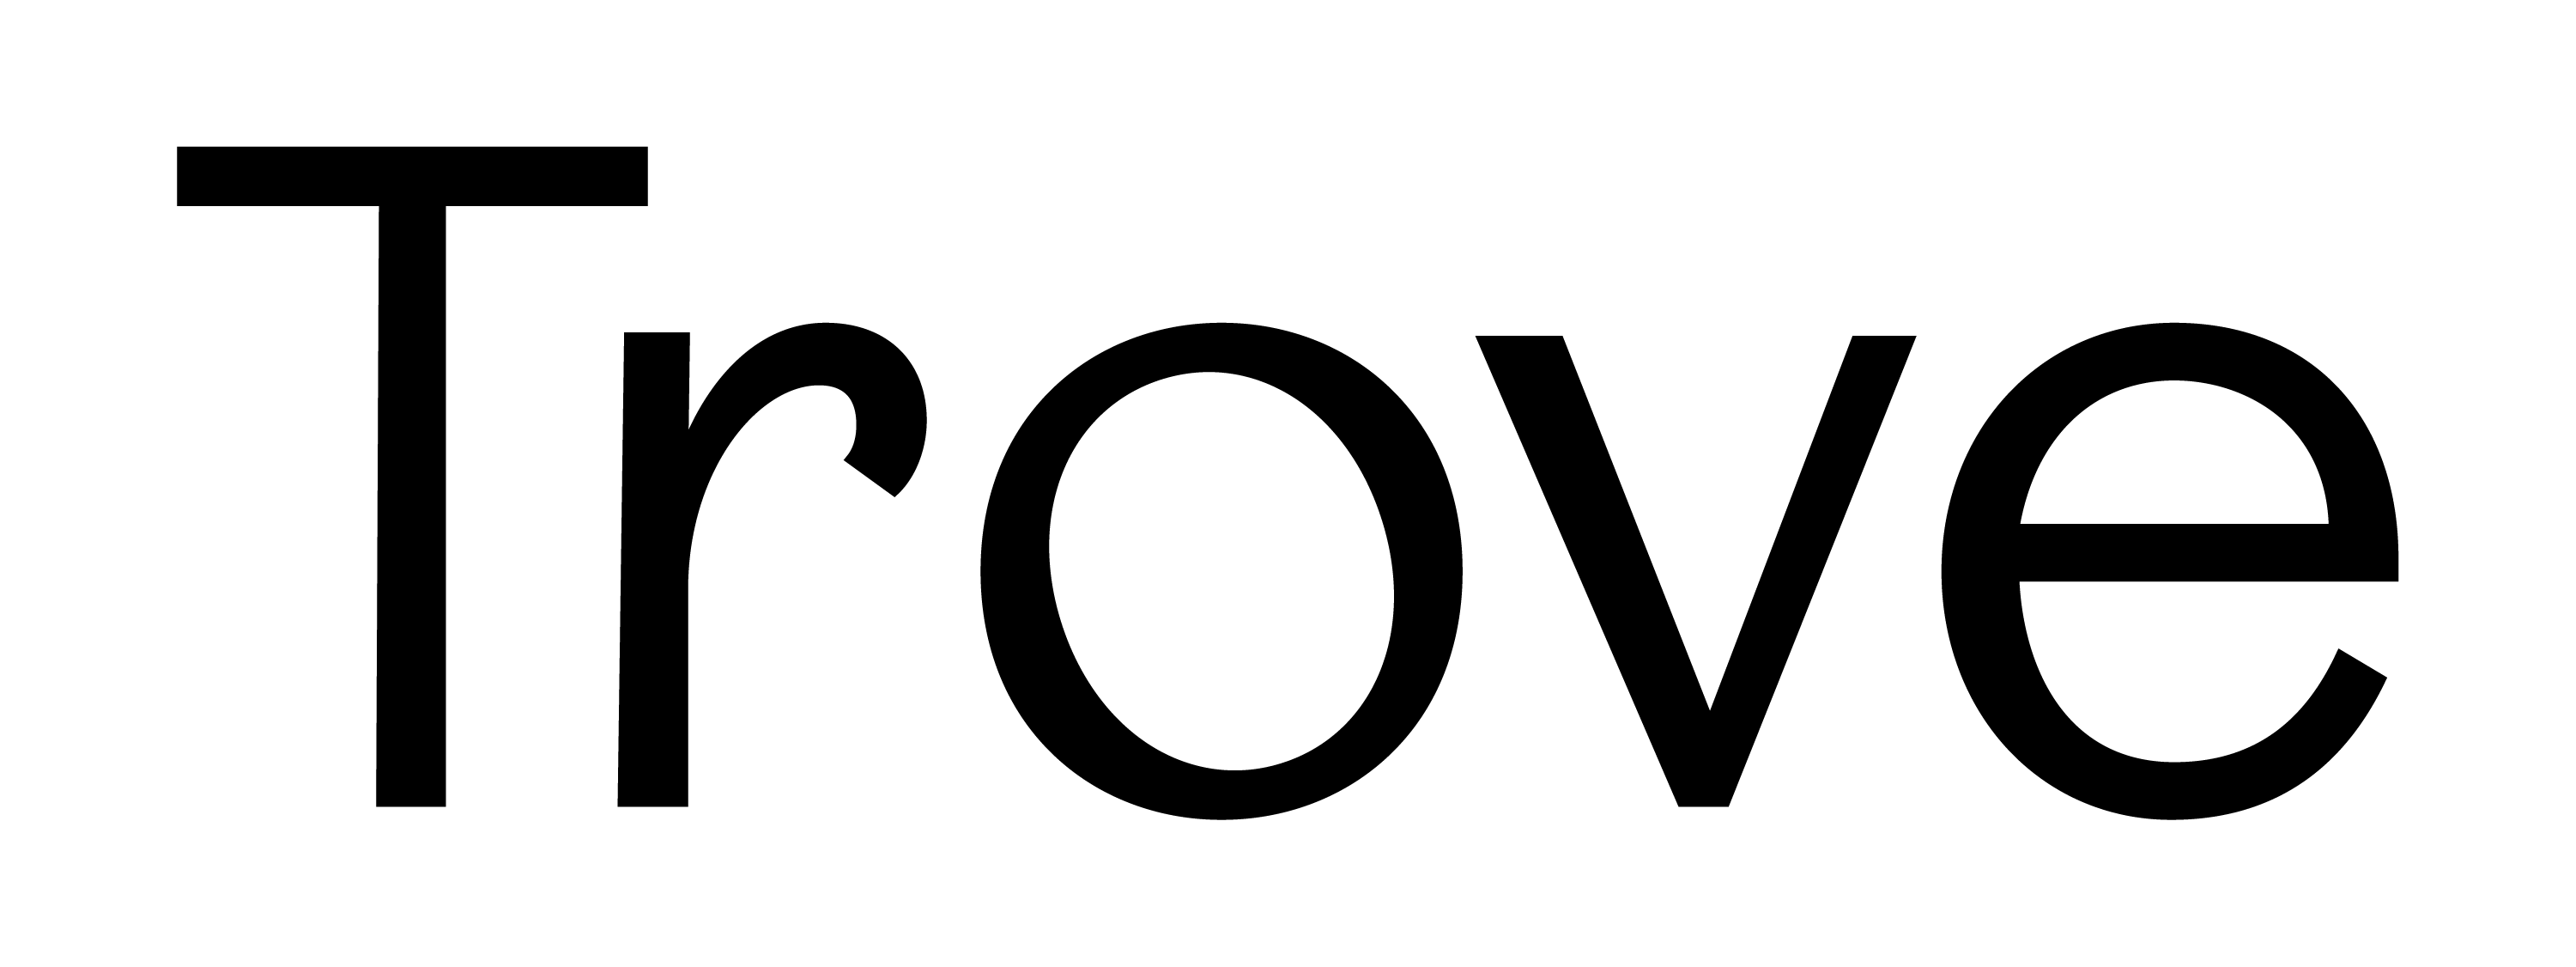 Trove Logo Png - Free Logo Image